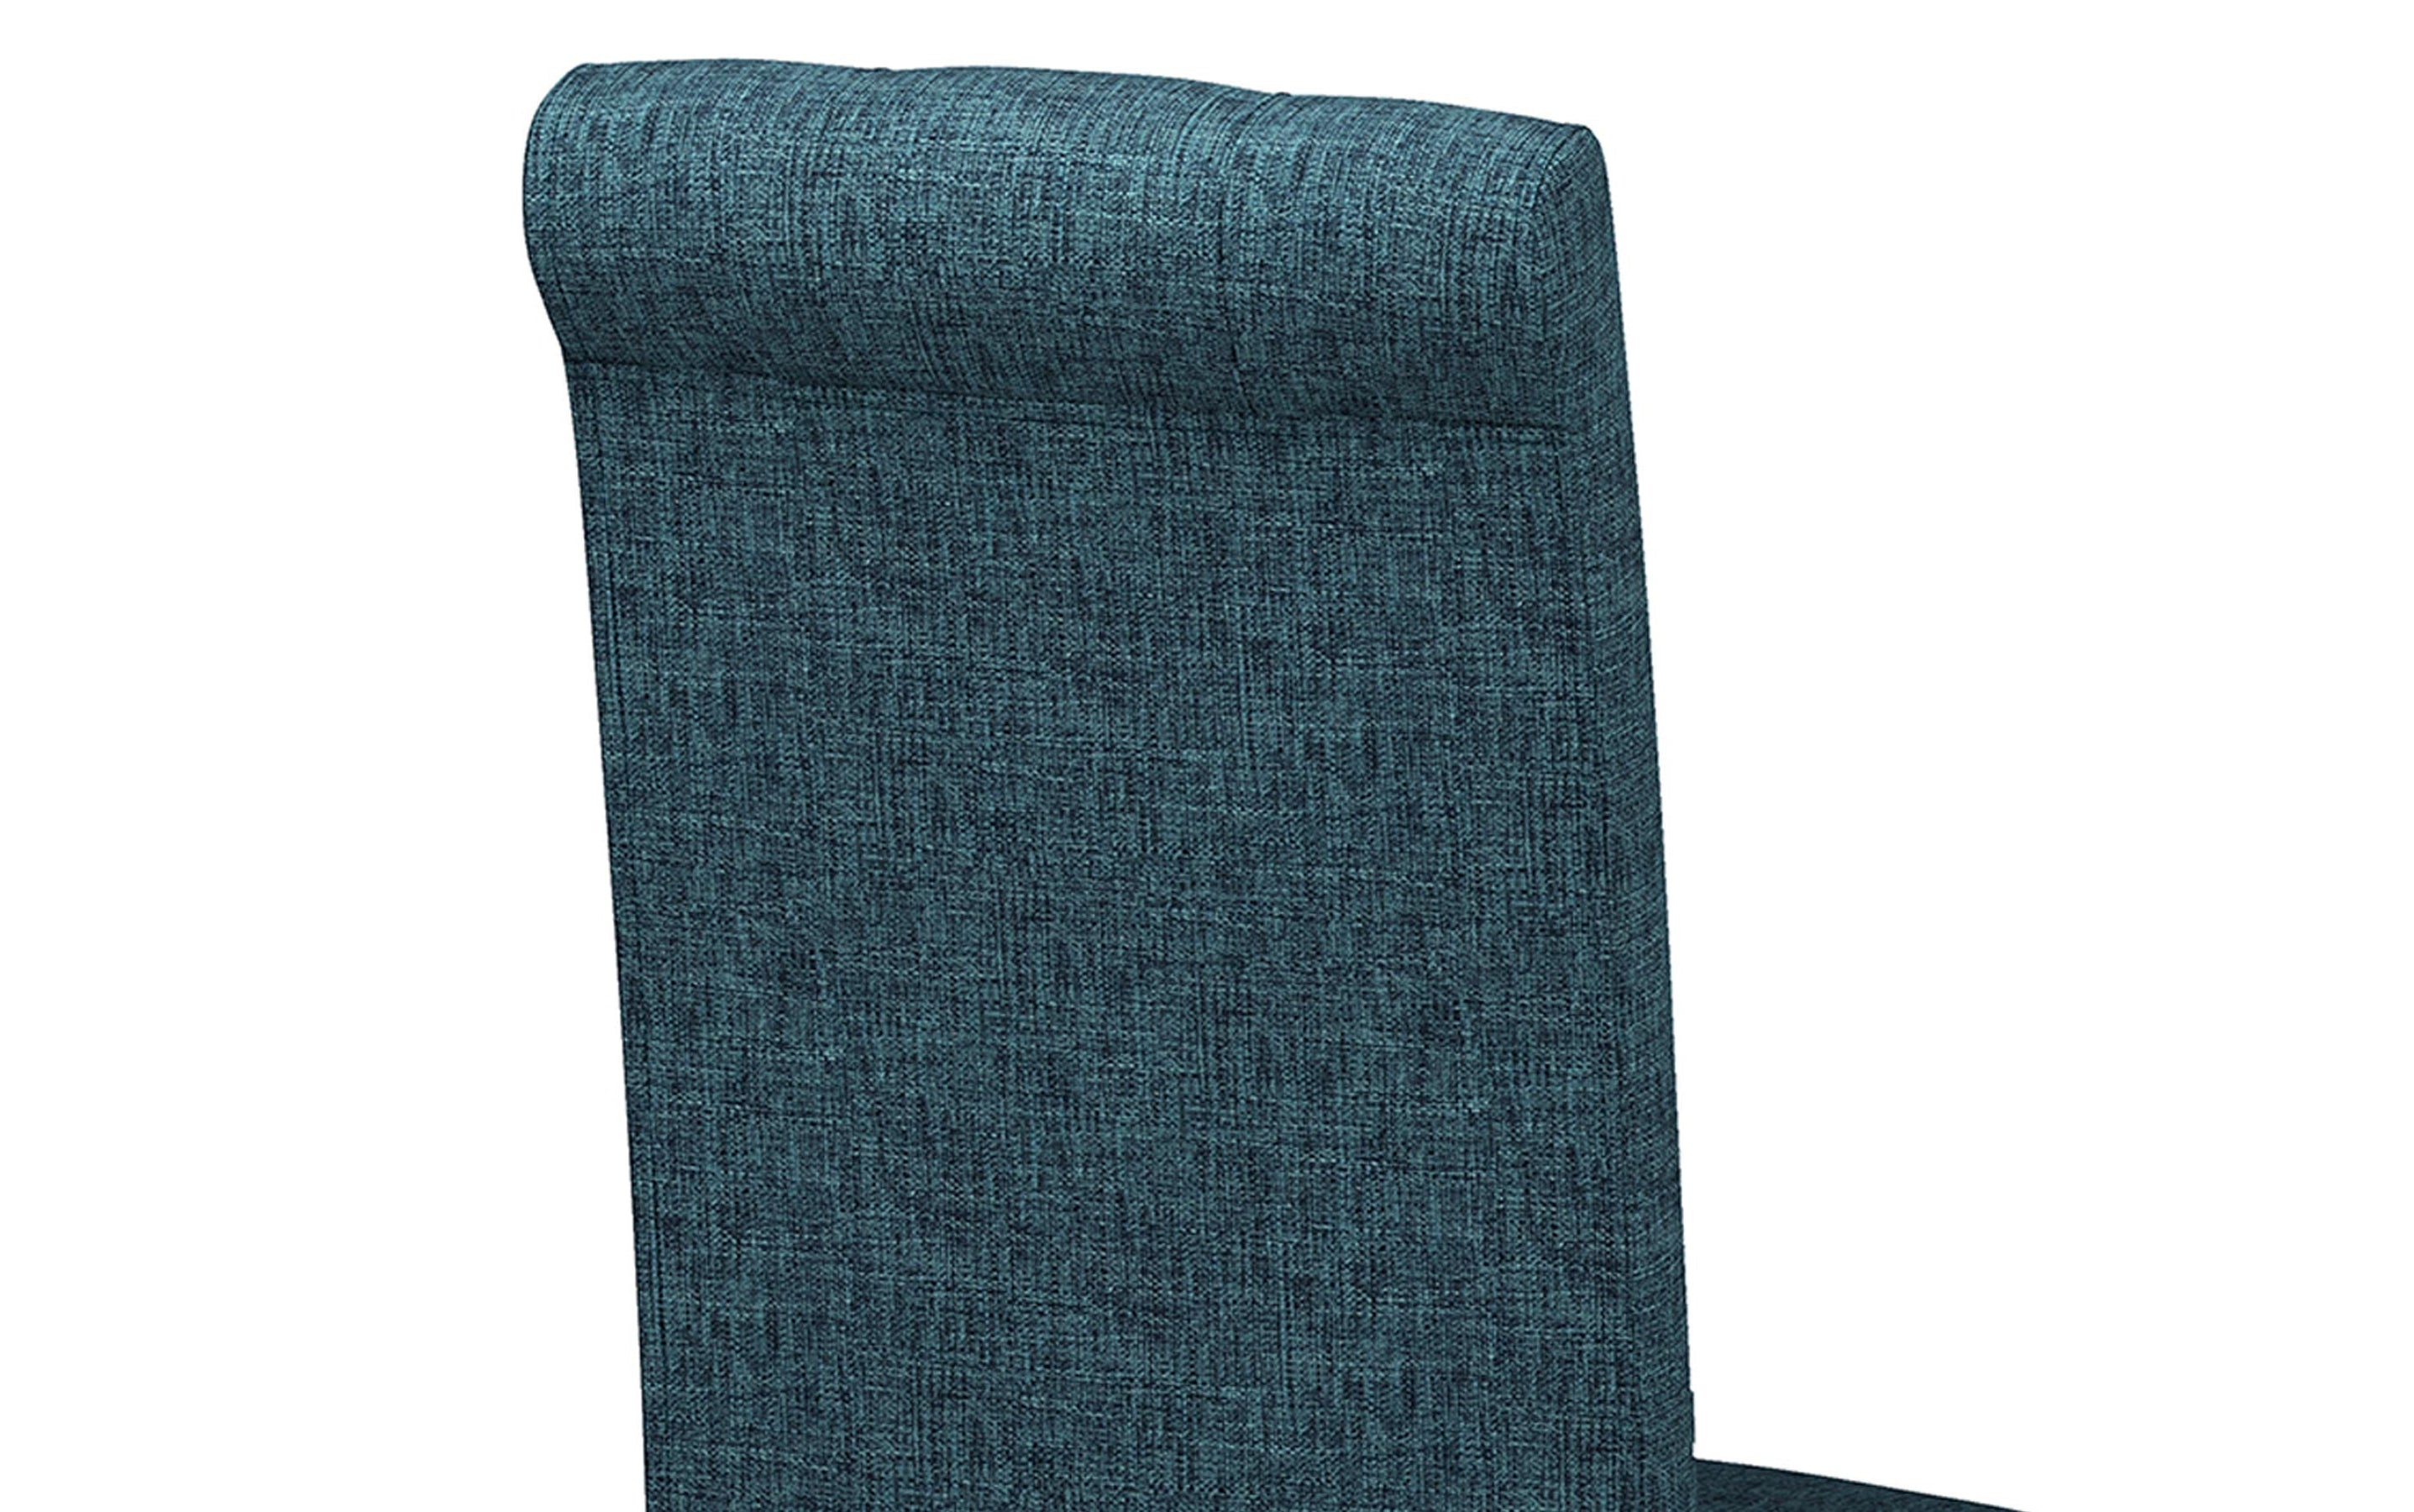 Denim Blue Linen Style Fabric | Cosmopolitan Large 7 piece Dining Set